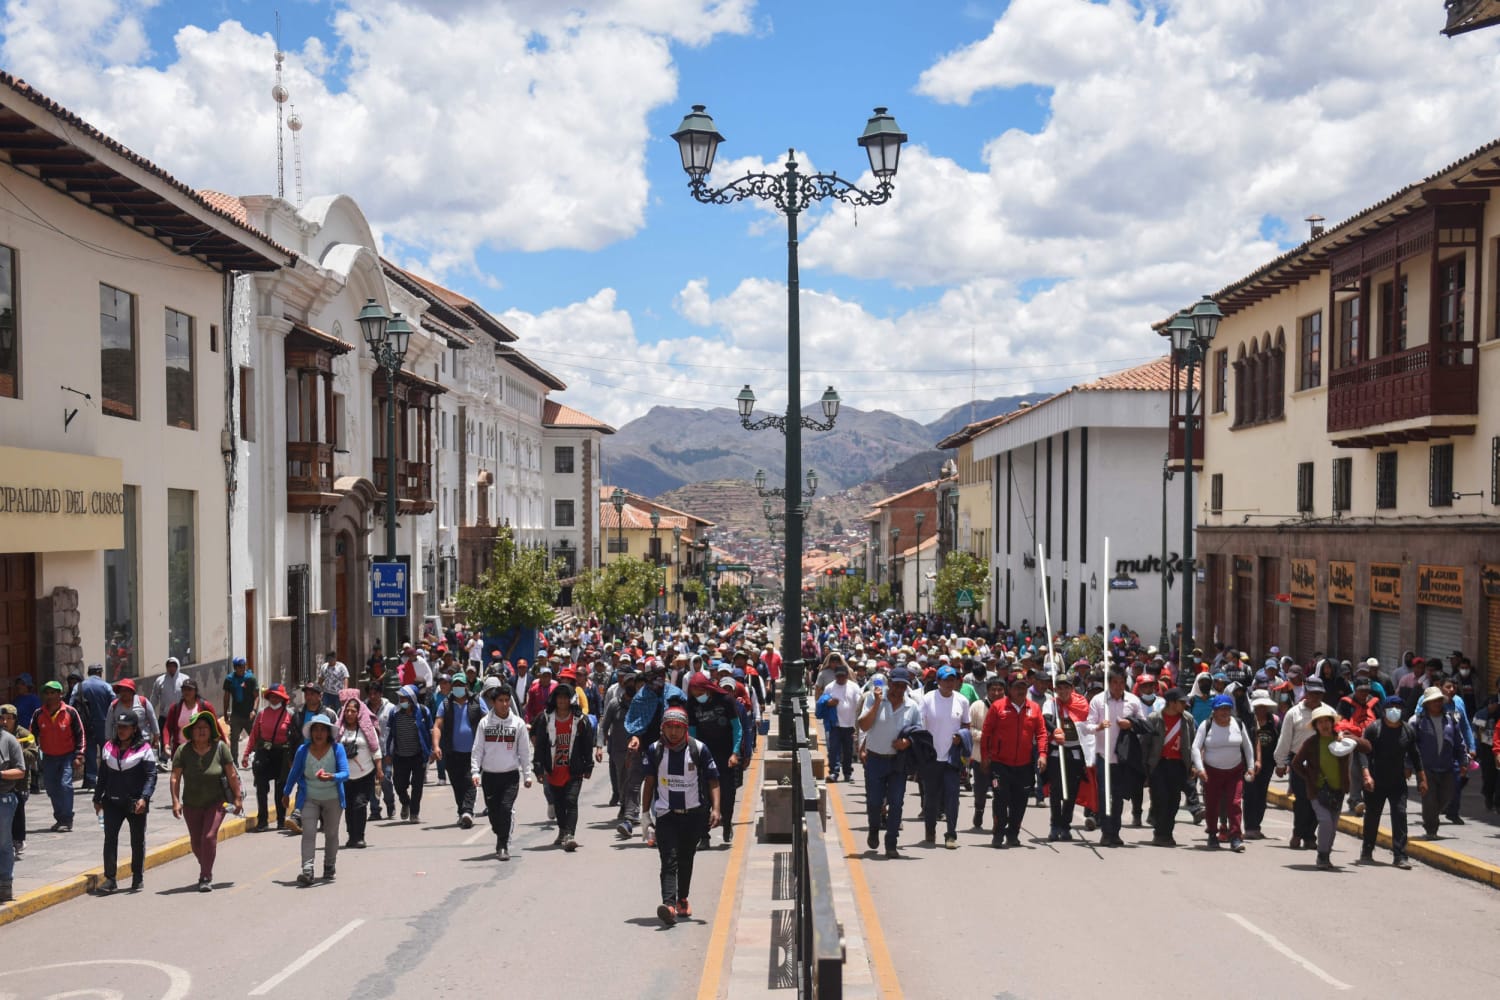 In Peru, thousands march demanding president step down